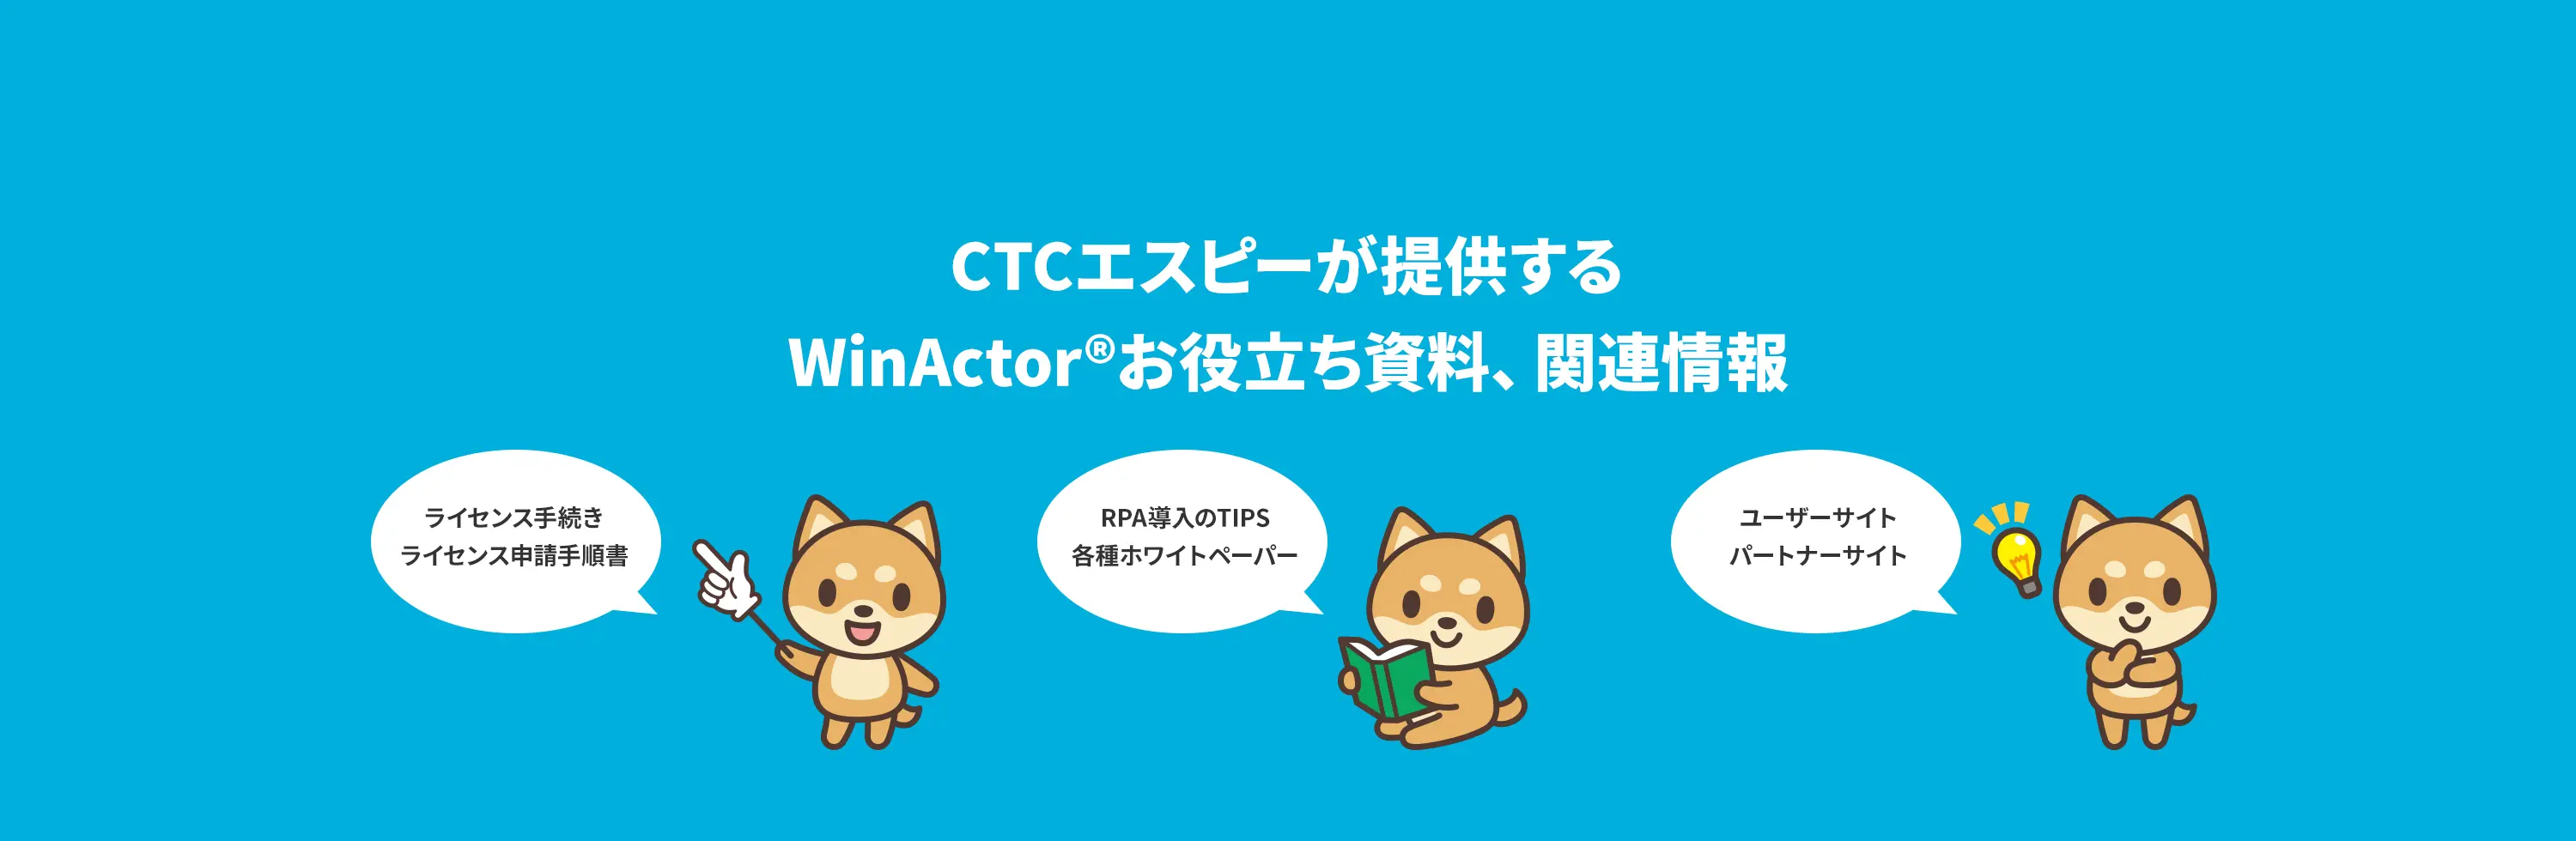 CTCエスピーが提供するWinActor®お役立ち資料、関連情報